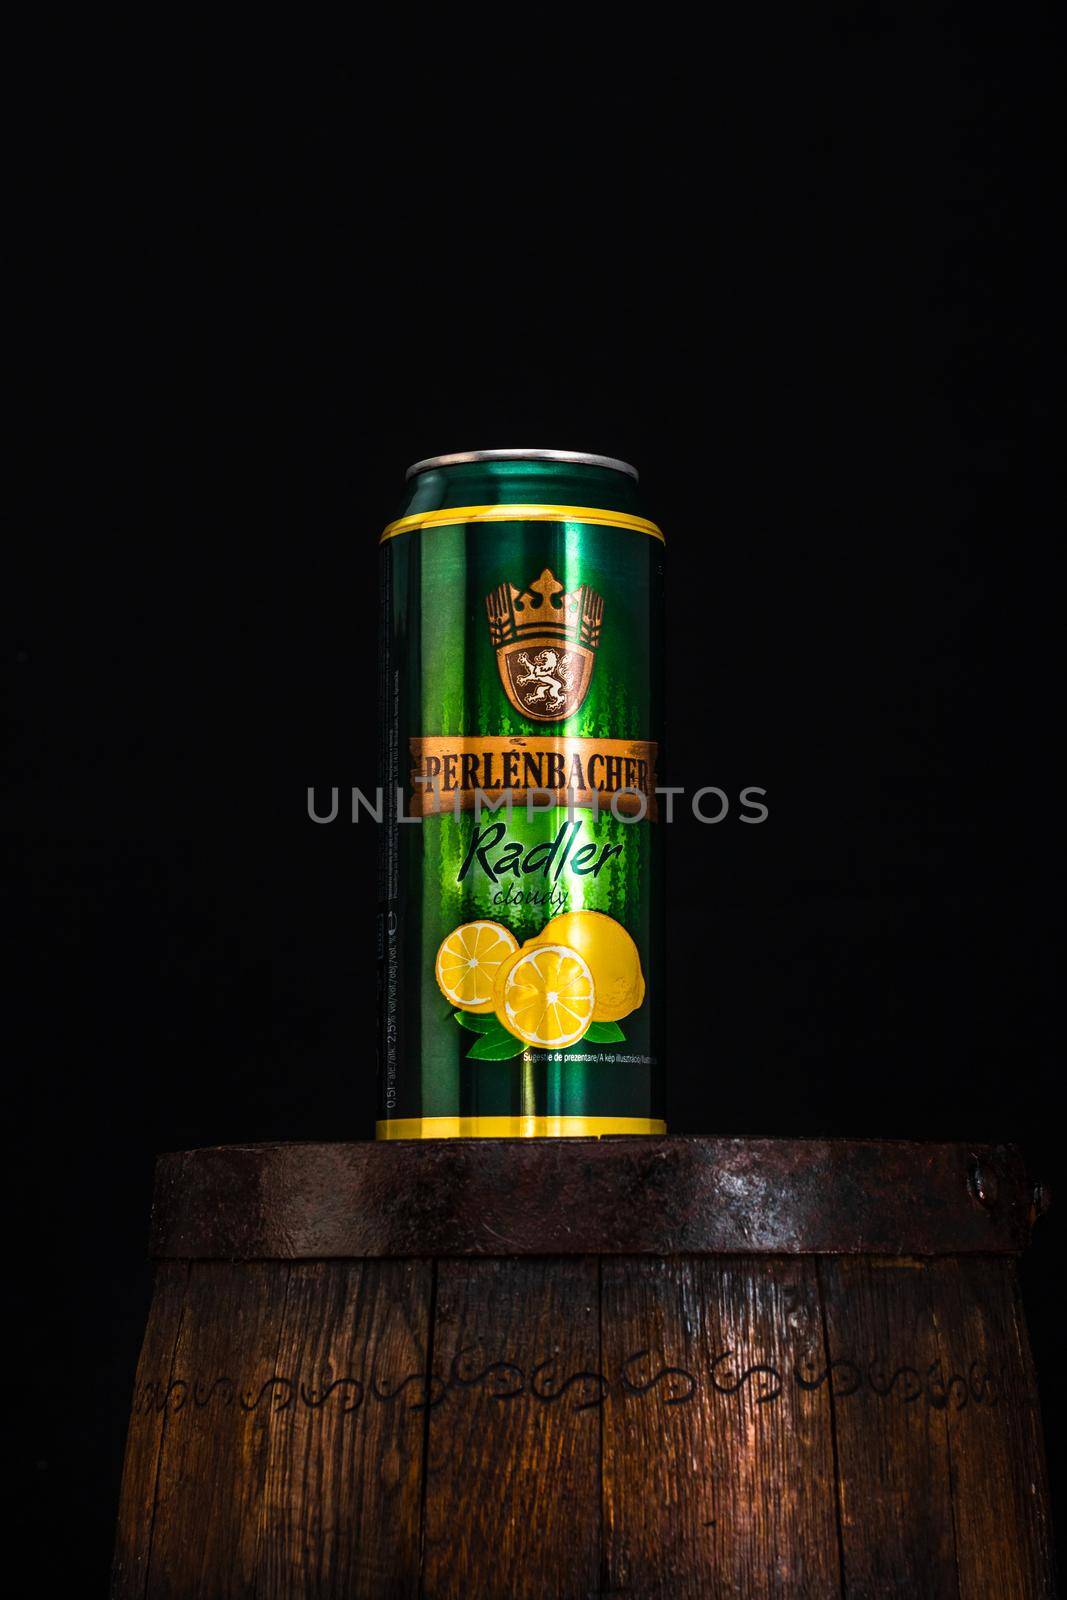 Can of Perlenbacher Radler beer on beer barrel with dark background. Illustrative editorial photo shot in Bucharest, Romania, 2021 by vladispas